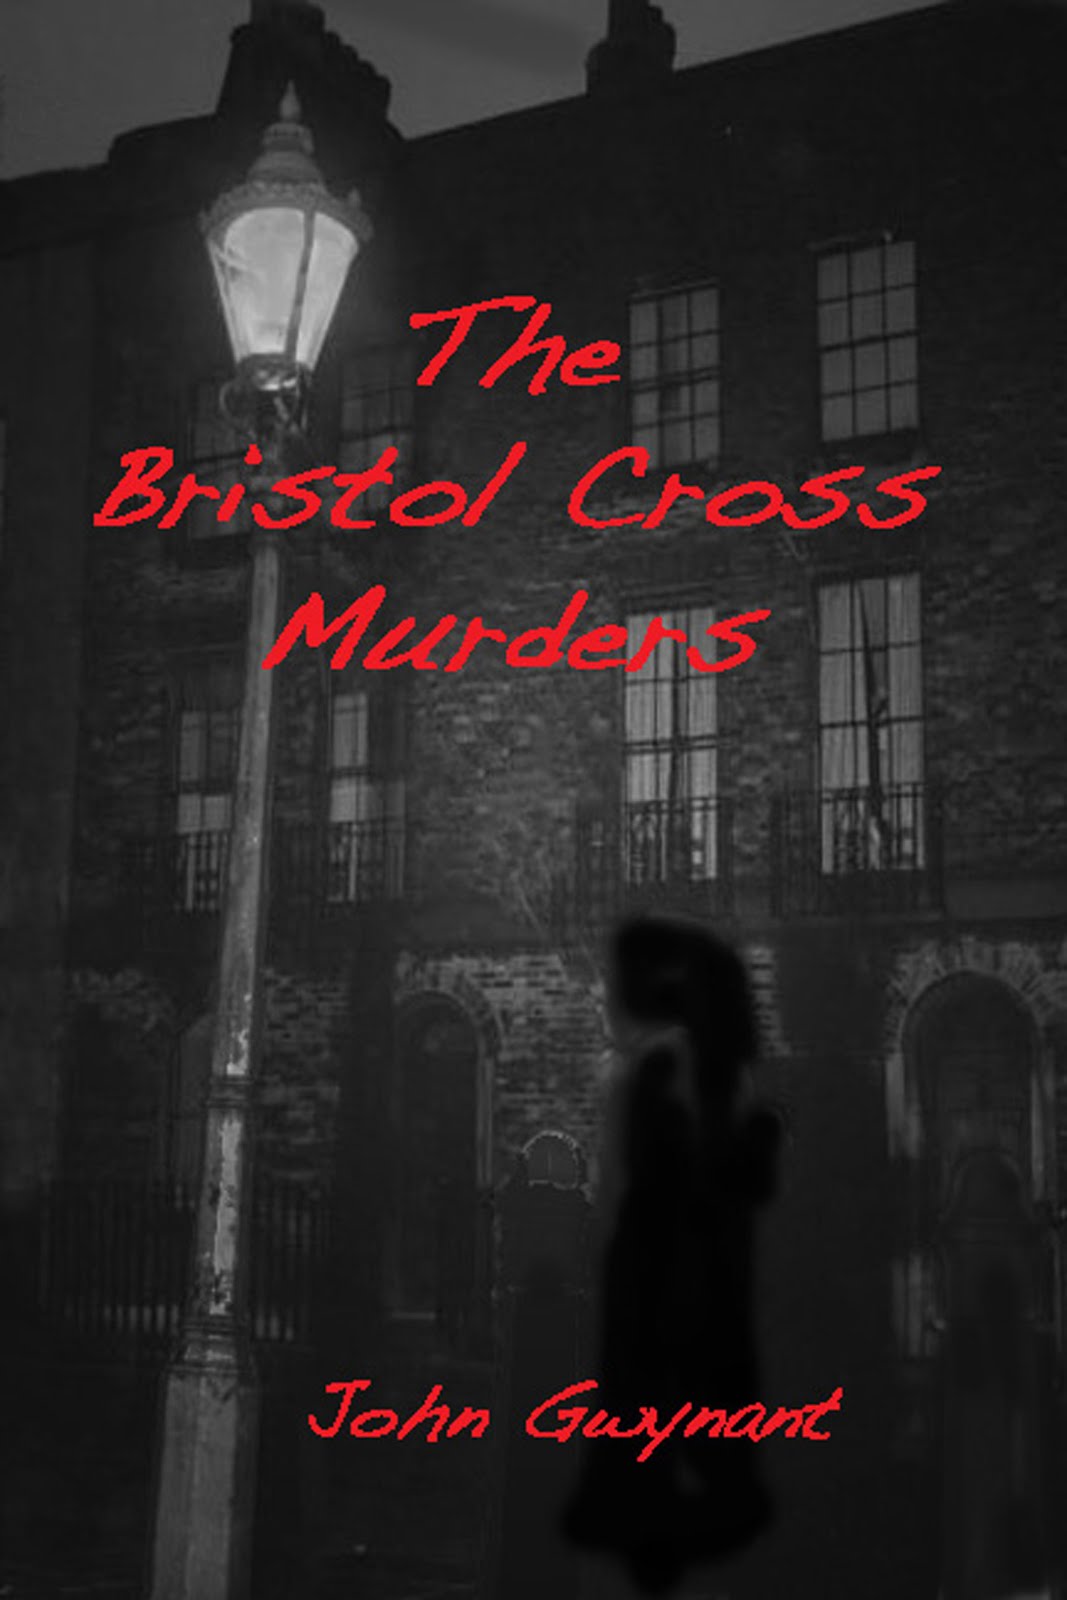 The Bristol Cross Murders